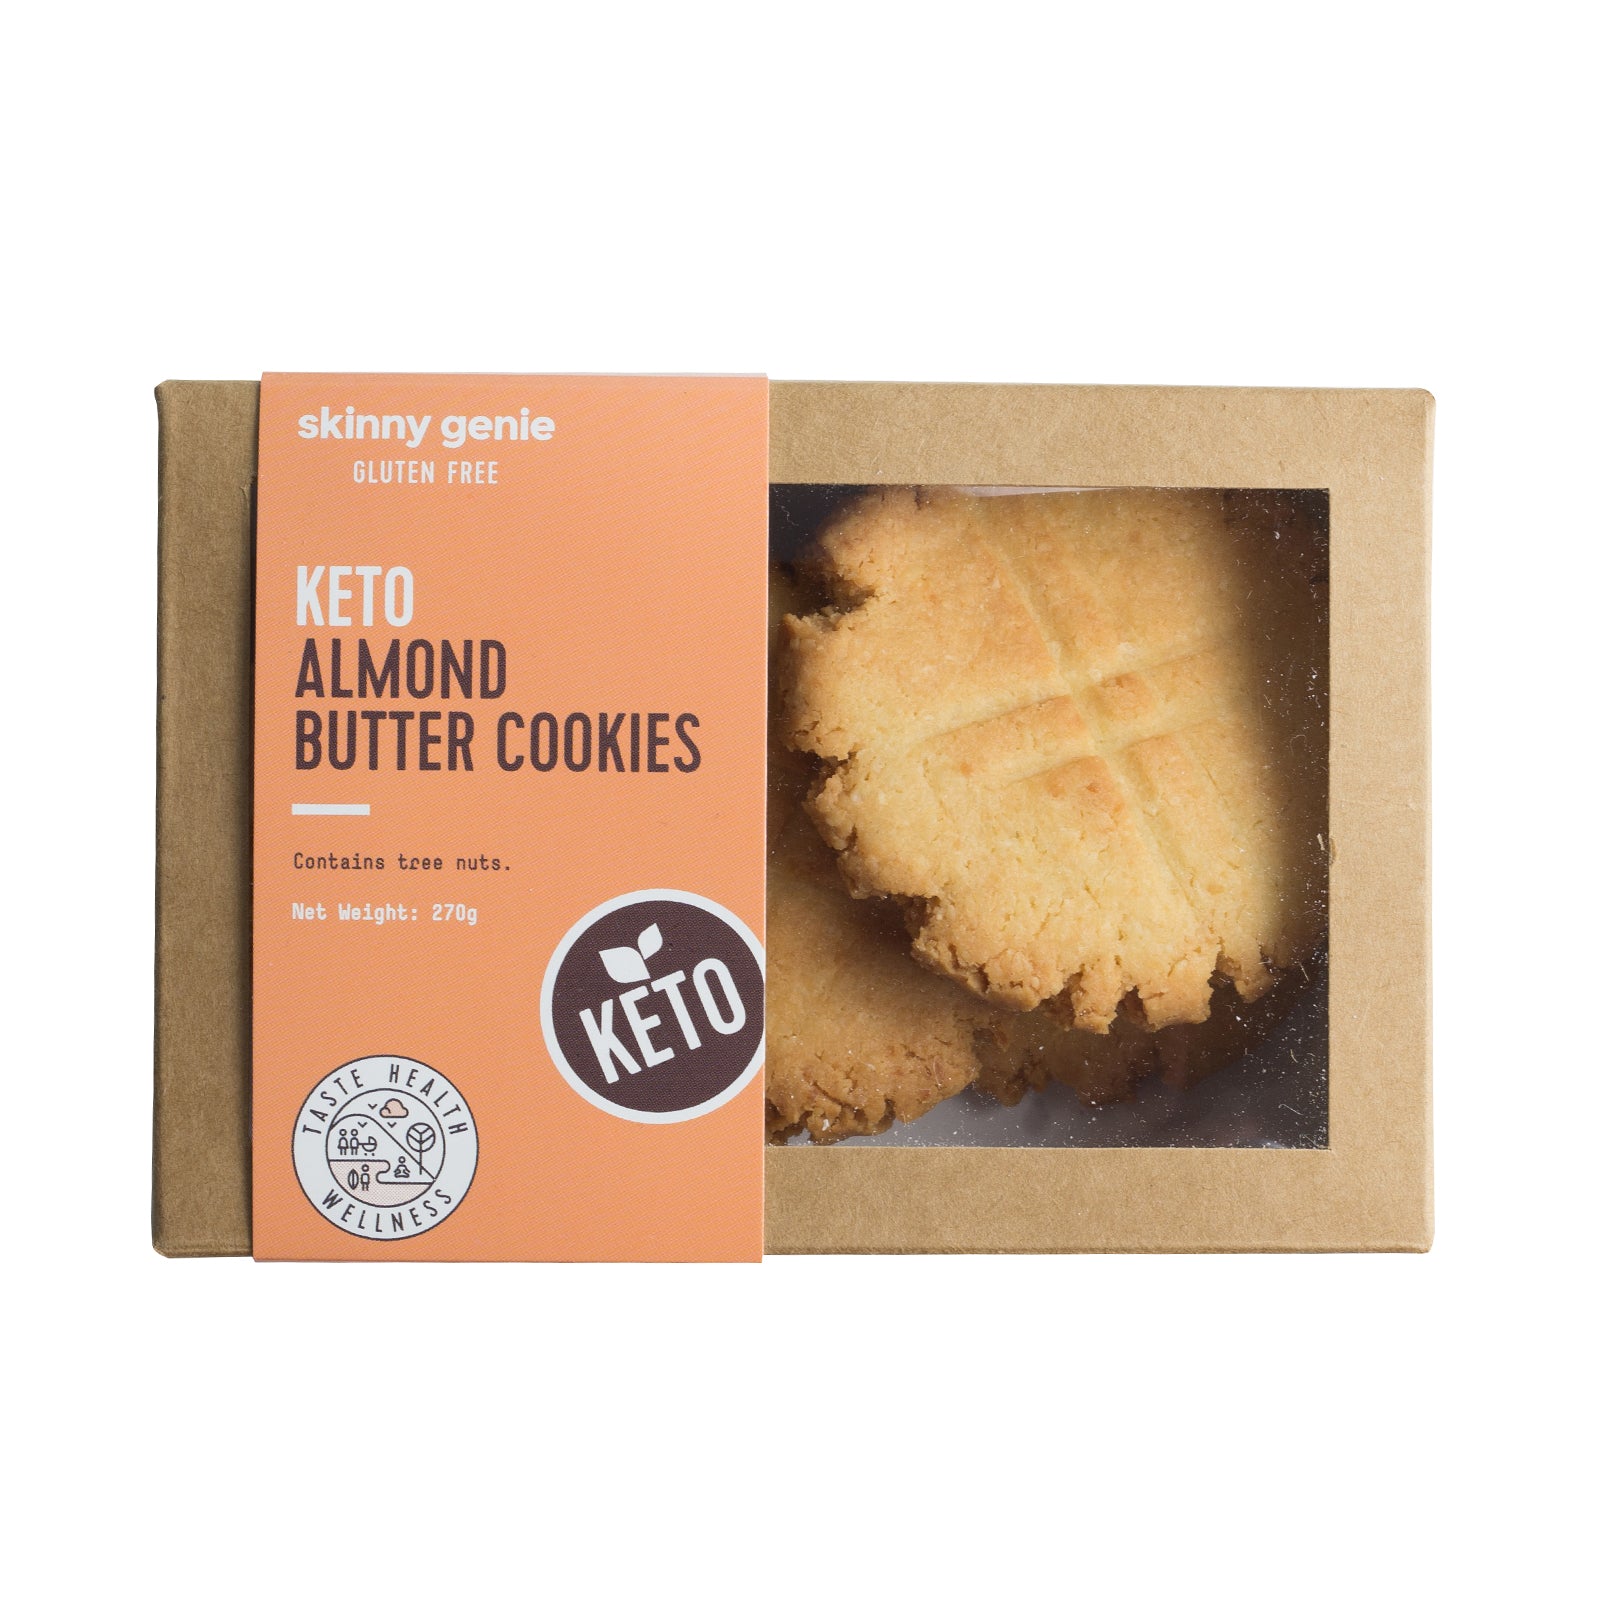 SKINNY GENIE Keto Almond Butter Cookies, 45g - Pack of 6